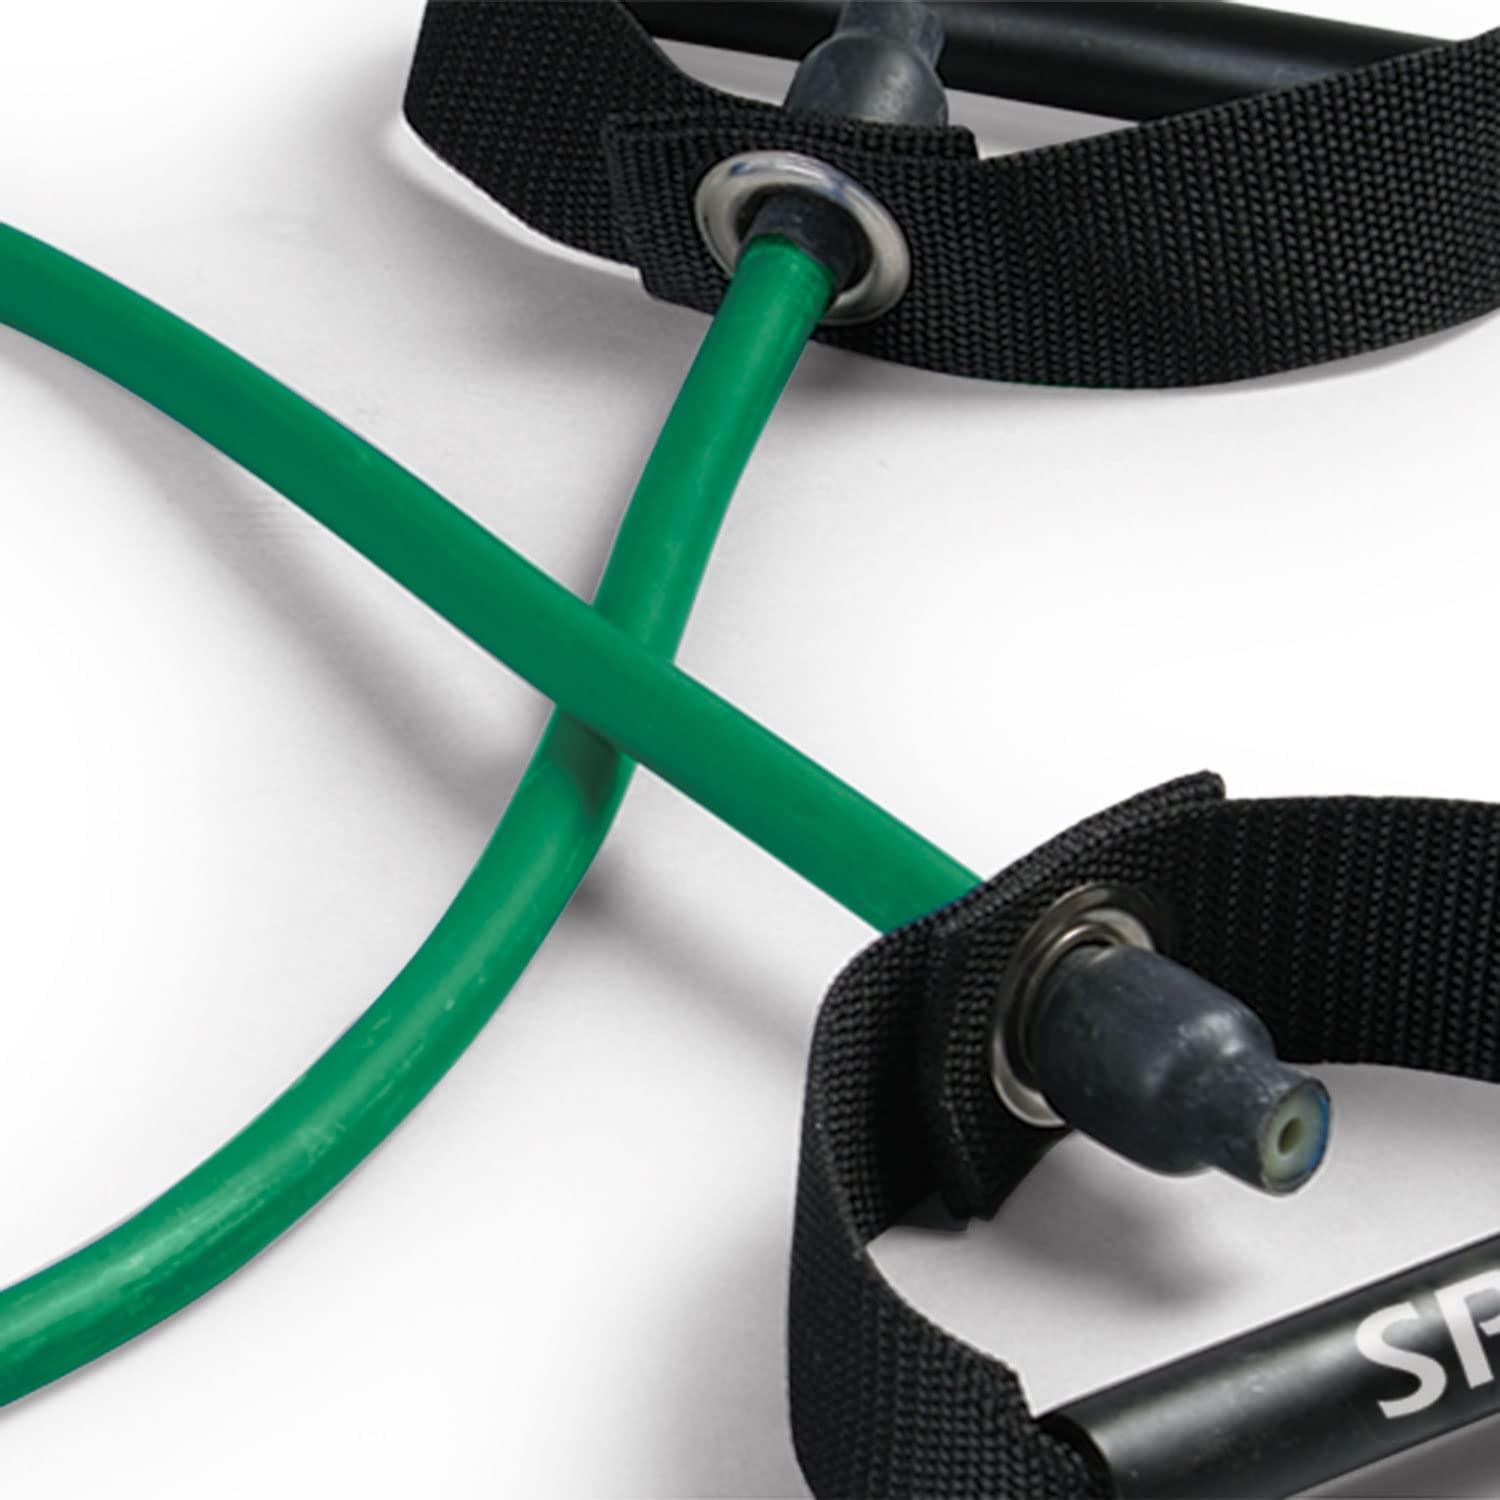  SPRI Stretch Strap with Loop Handles - Resistance